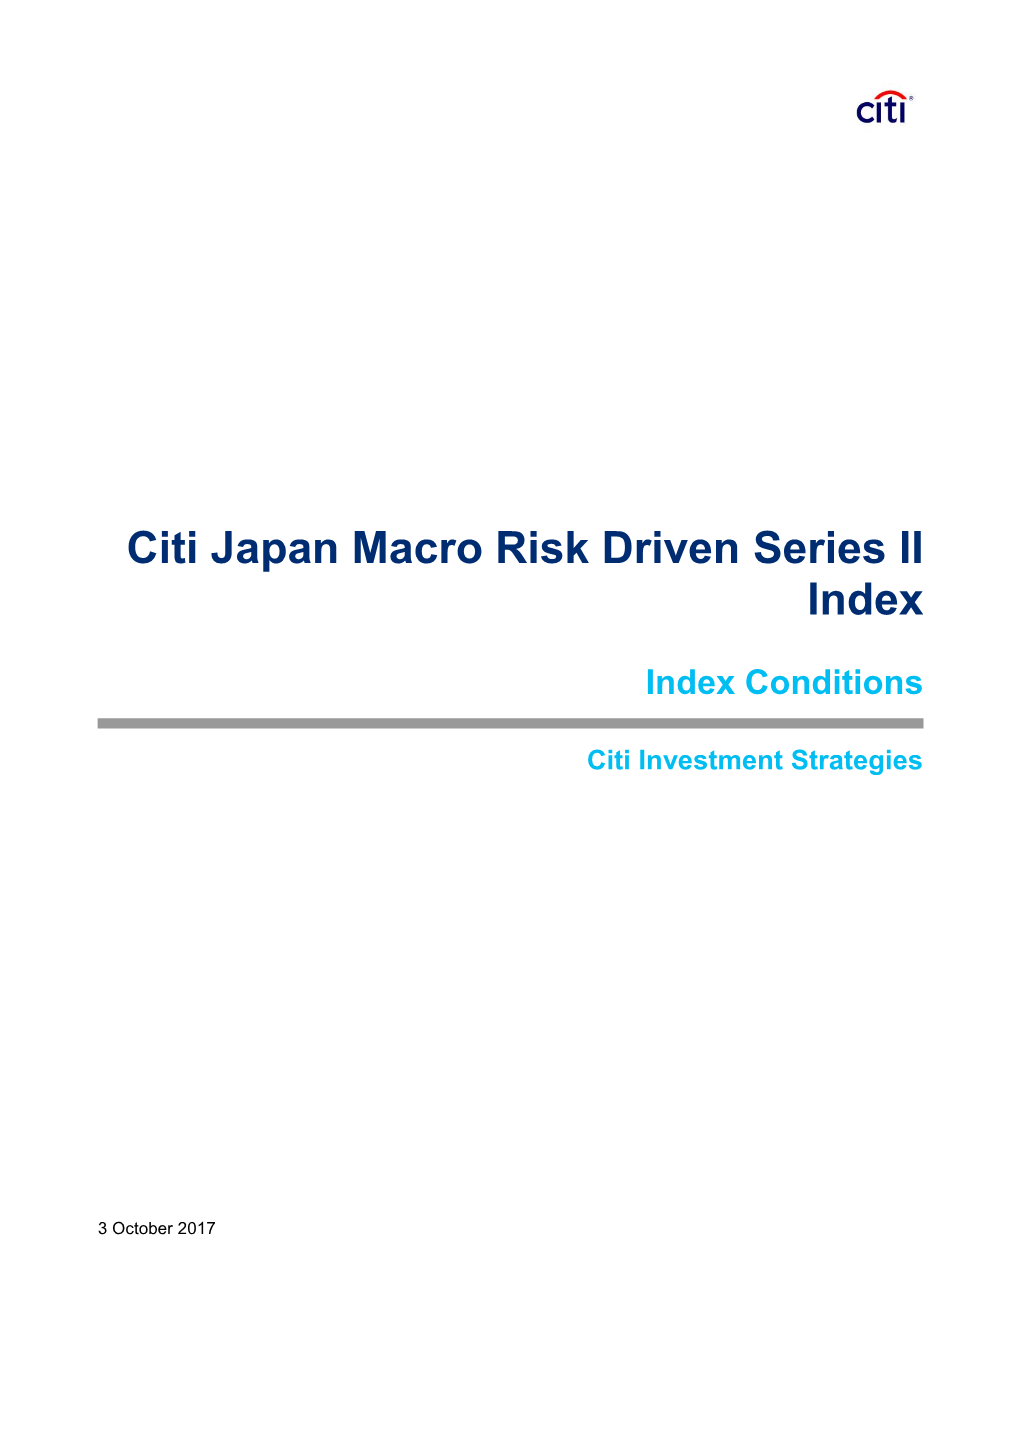 Citi Japan Macro Risk Driven Series II Index – Index Methodology